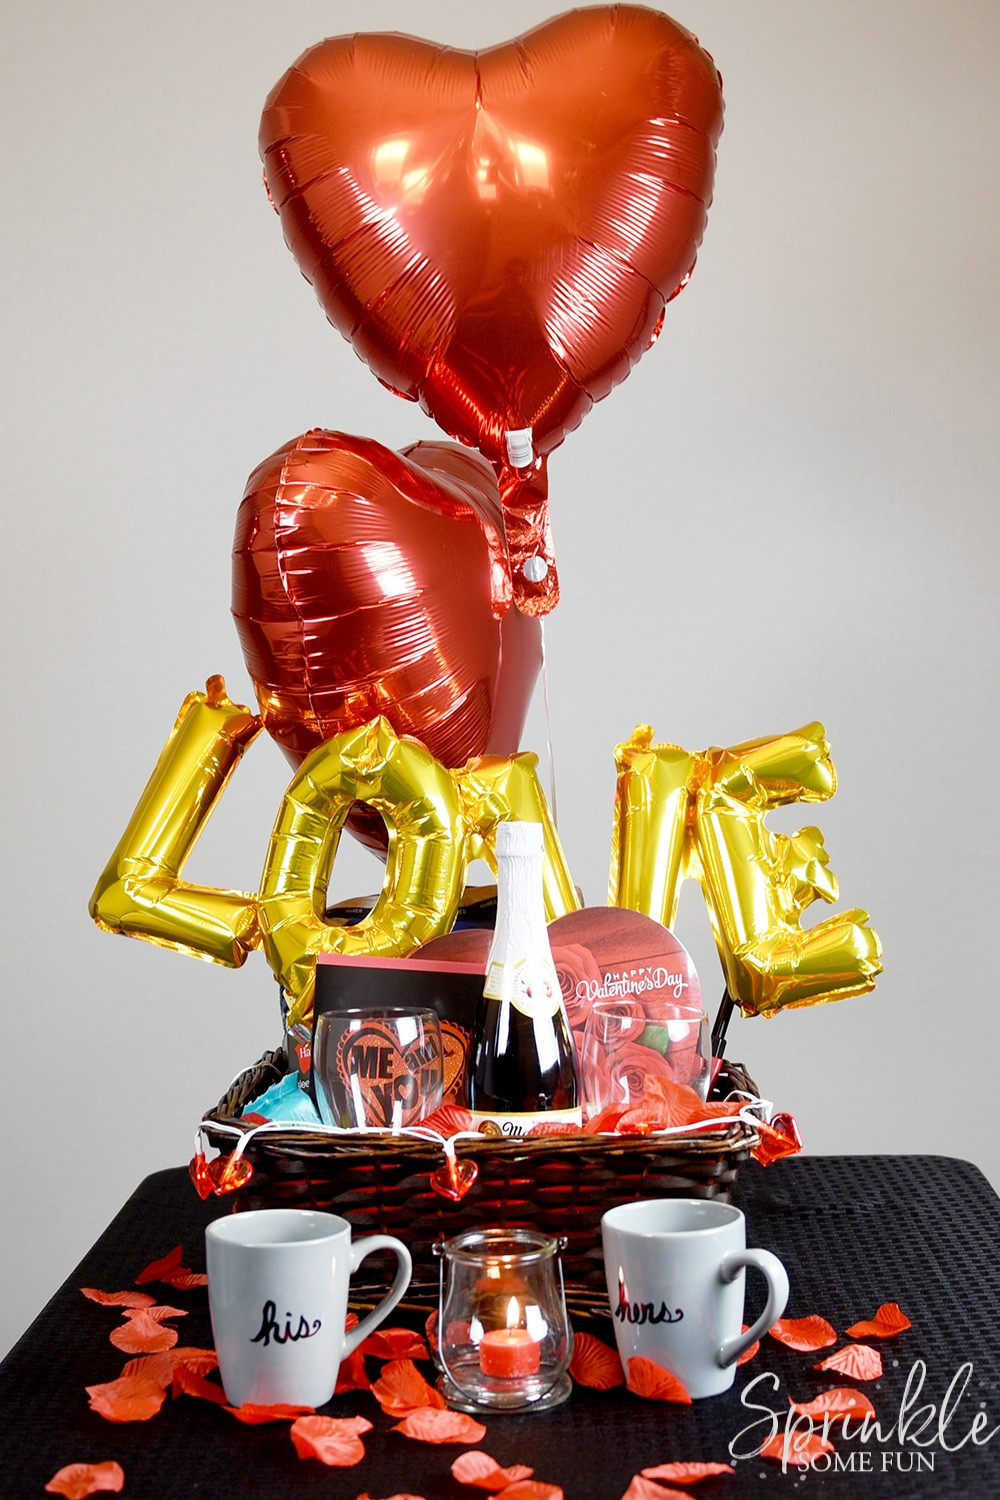 Valentine Ideas Gift
 Romantic Valentine Gift Basket Ideas ⋆ Sprinkle Some Fun